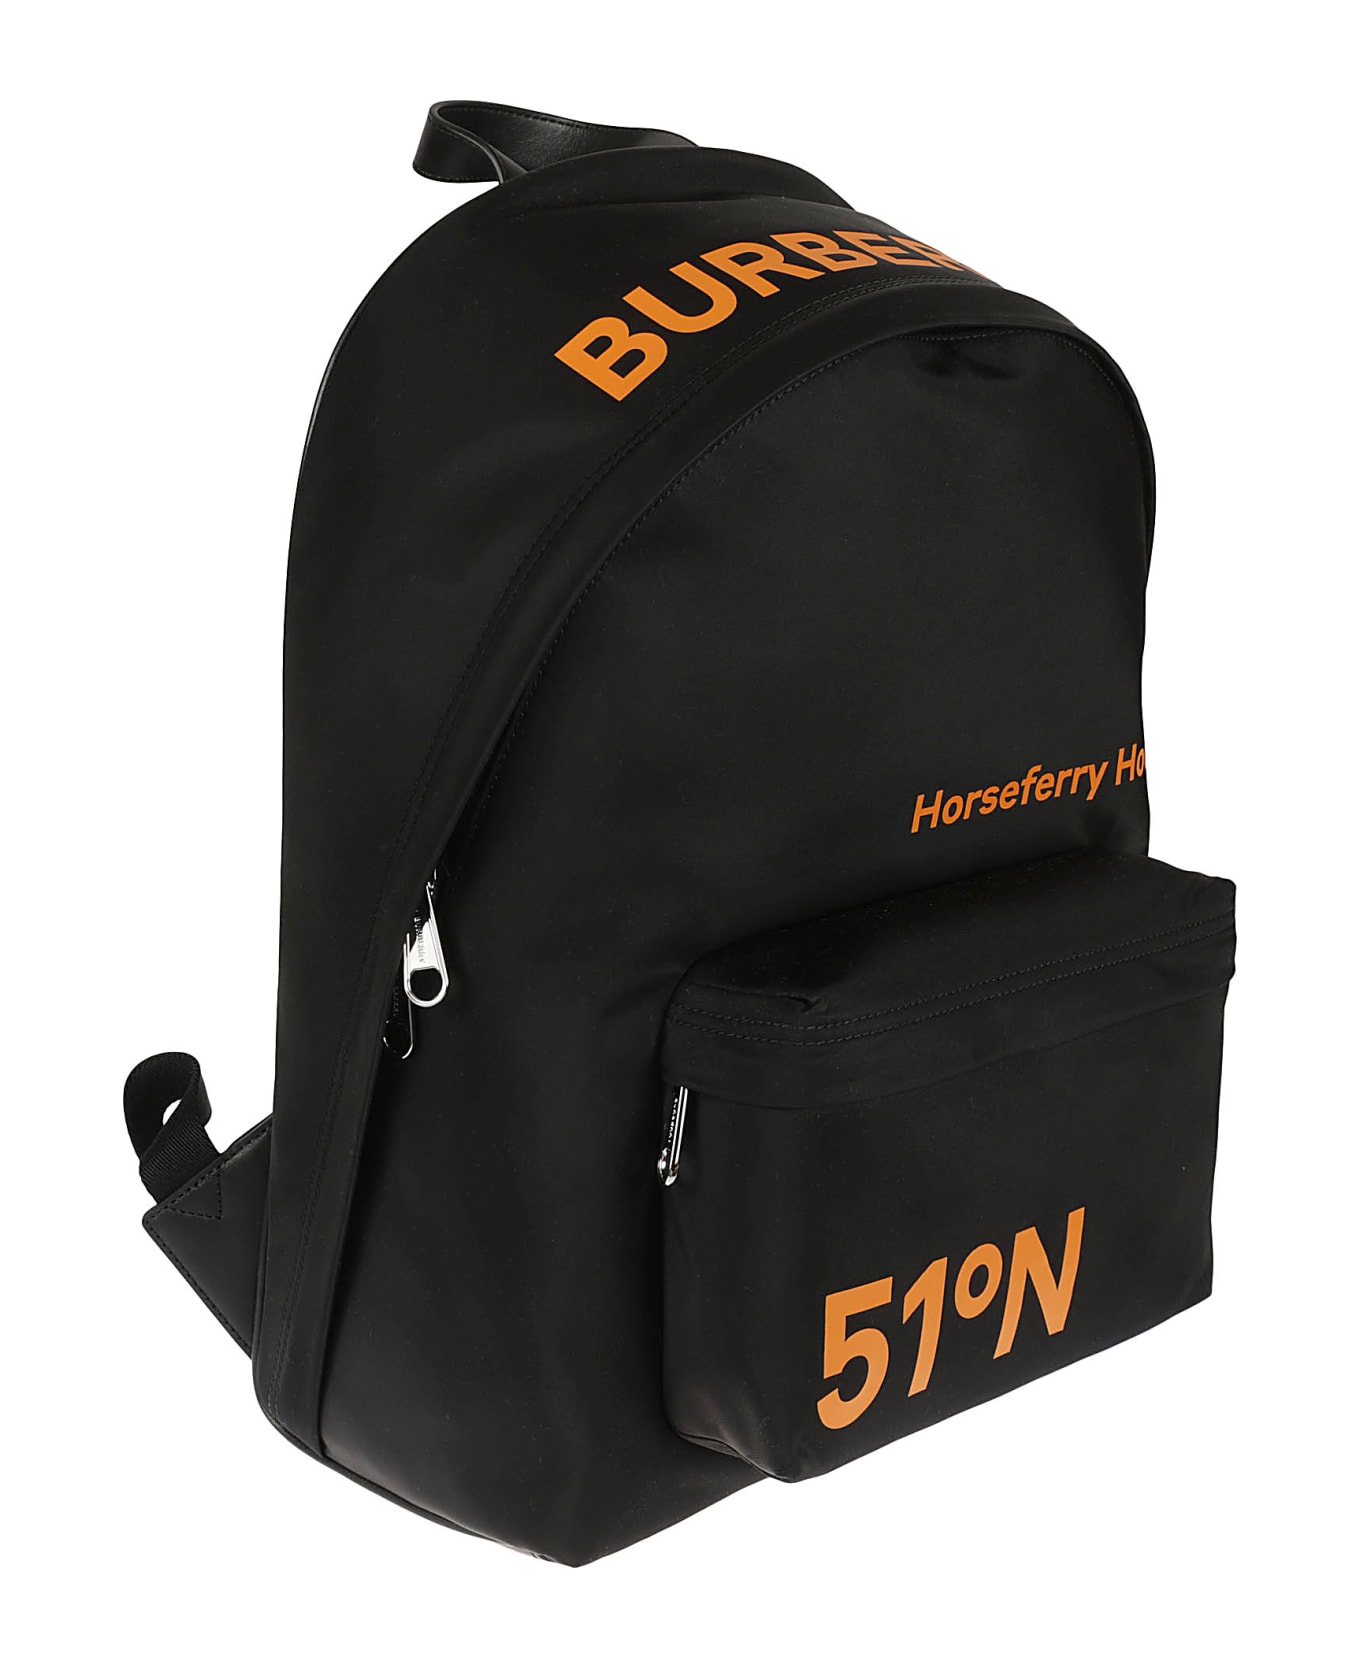 Burberry Horseferry House Backpack - Black/Orange